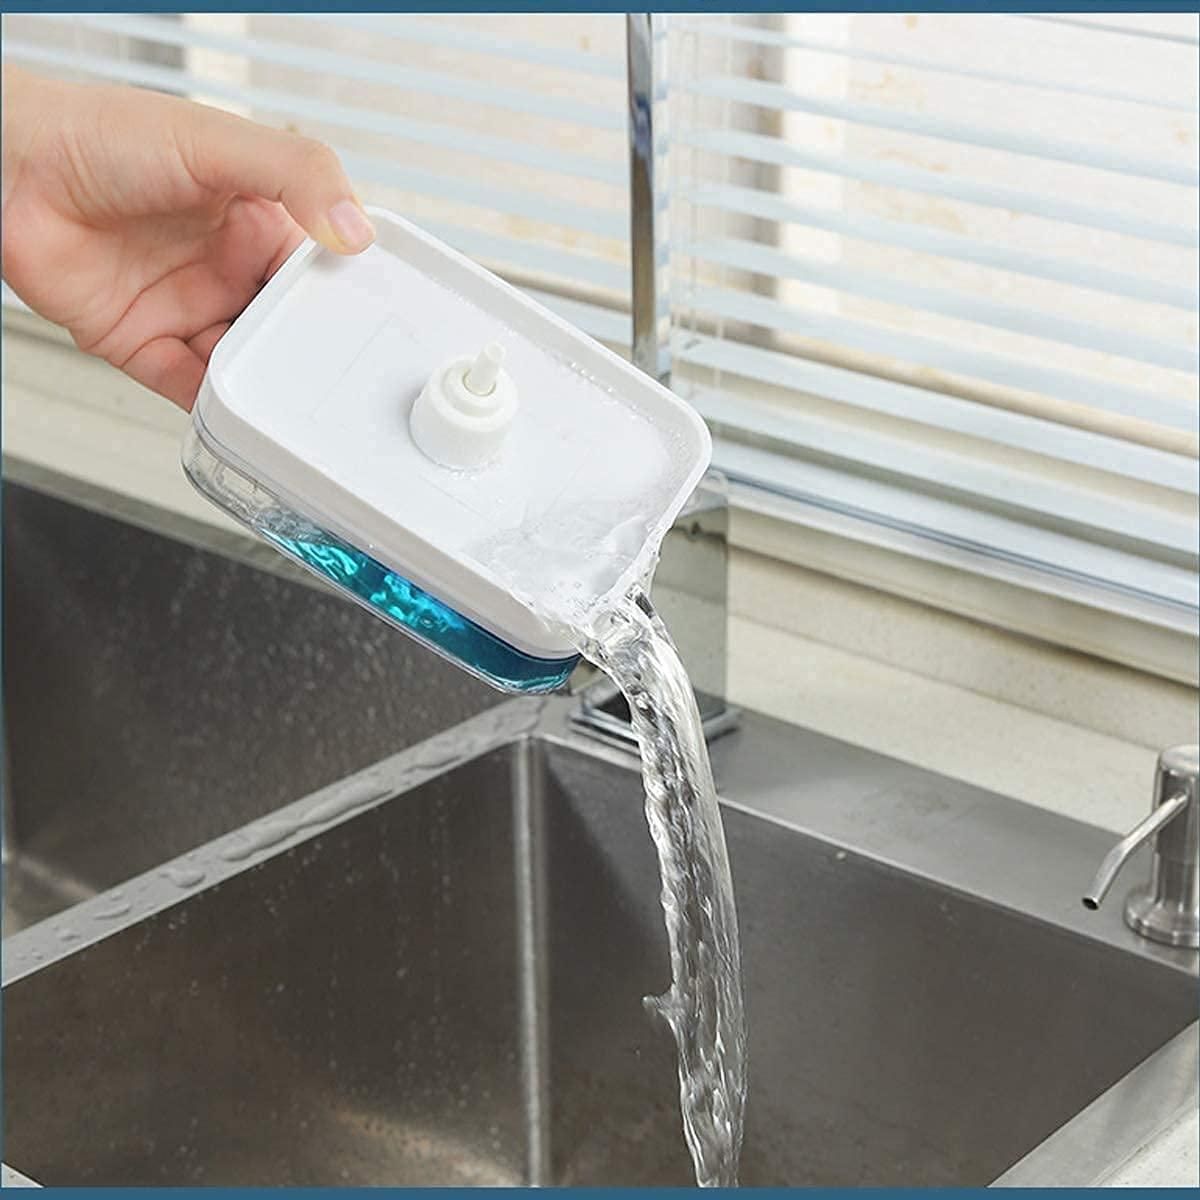 Liquid Soap Dispenser with Sponge Holder for Kitchen Sink